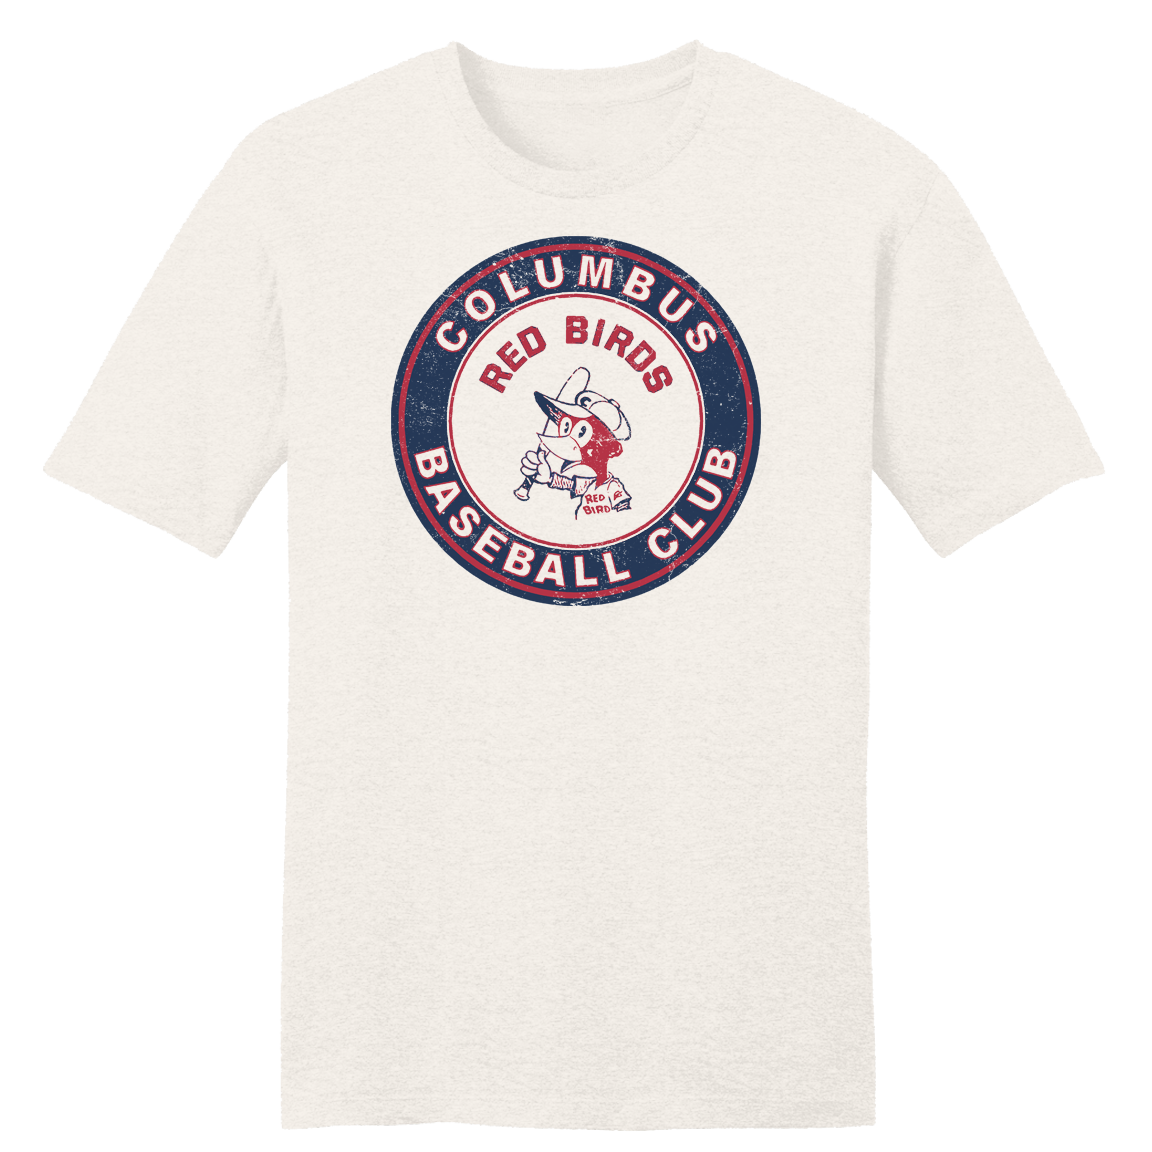 Columbus Red Birds Baseball T-shirt